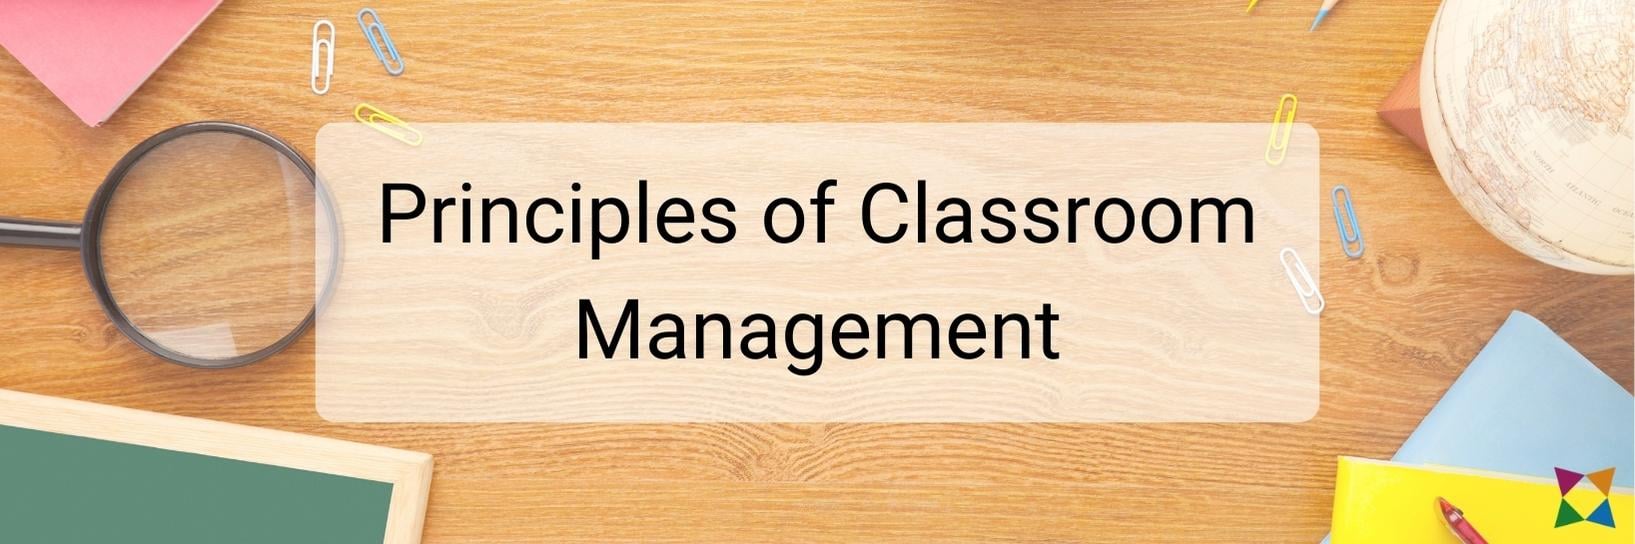 11 Principles of Classroom Management to Teach Digital Natives